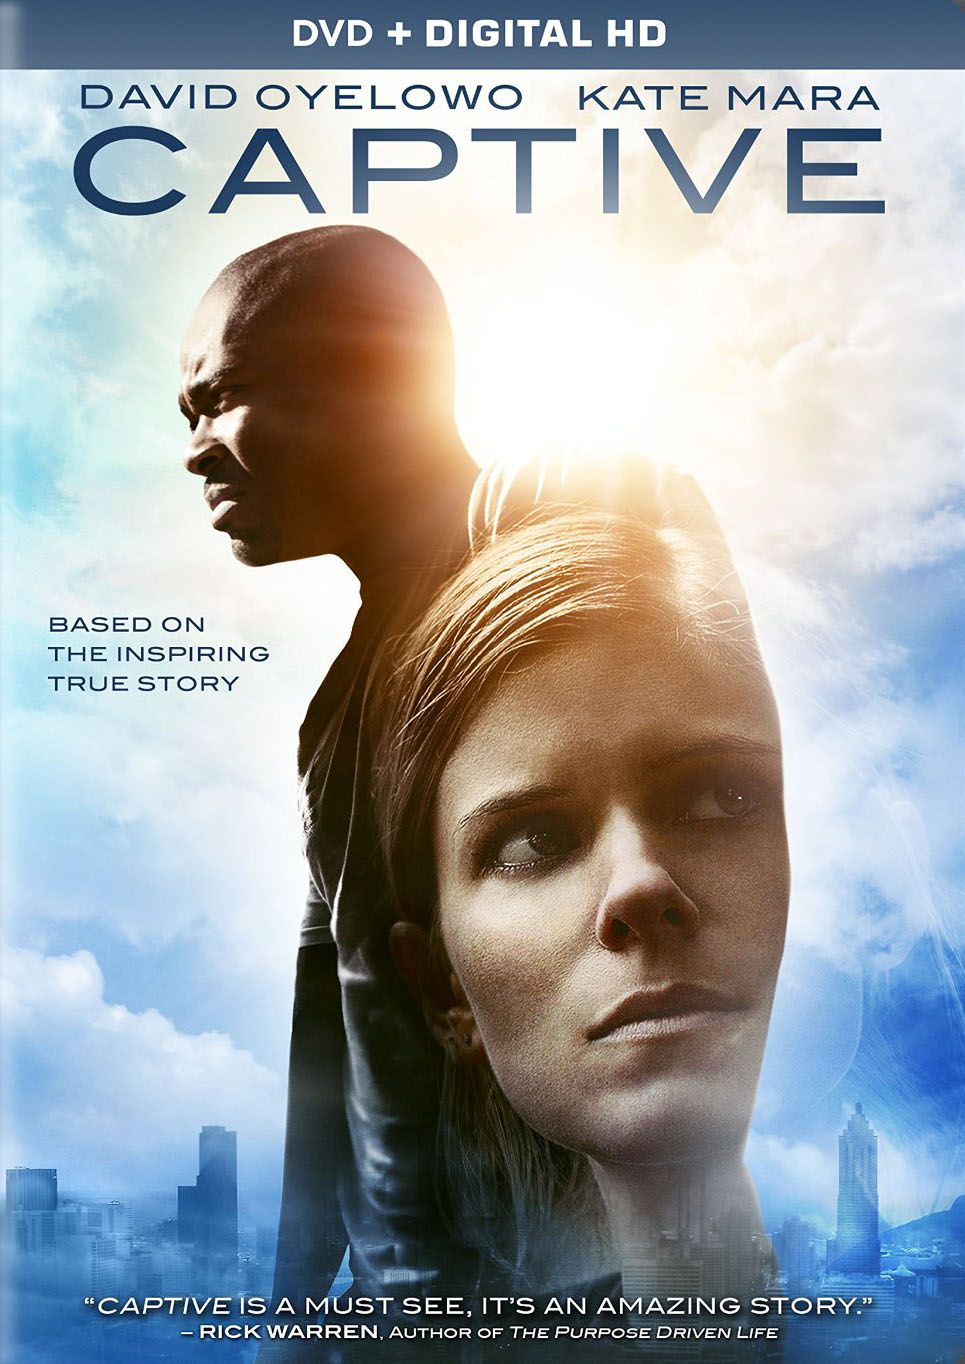 The Captive [DVD] [2014] - Best Buy